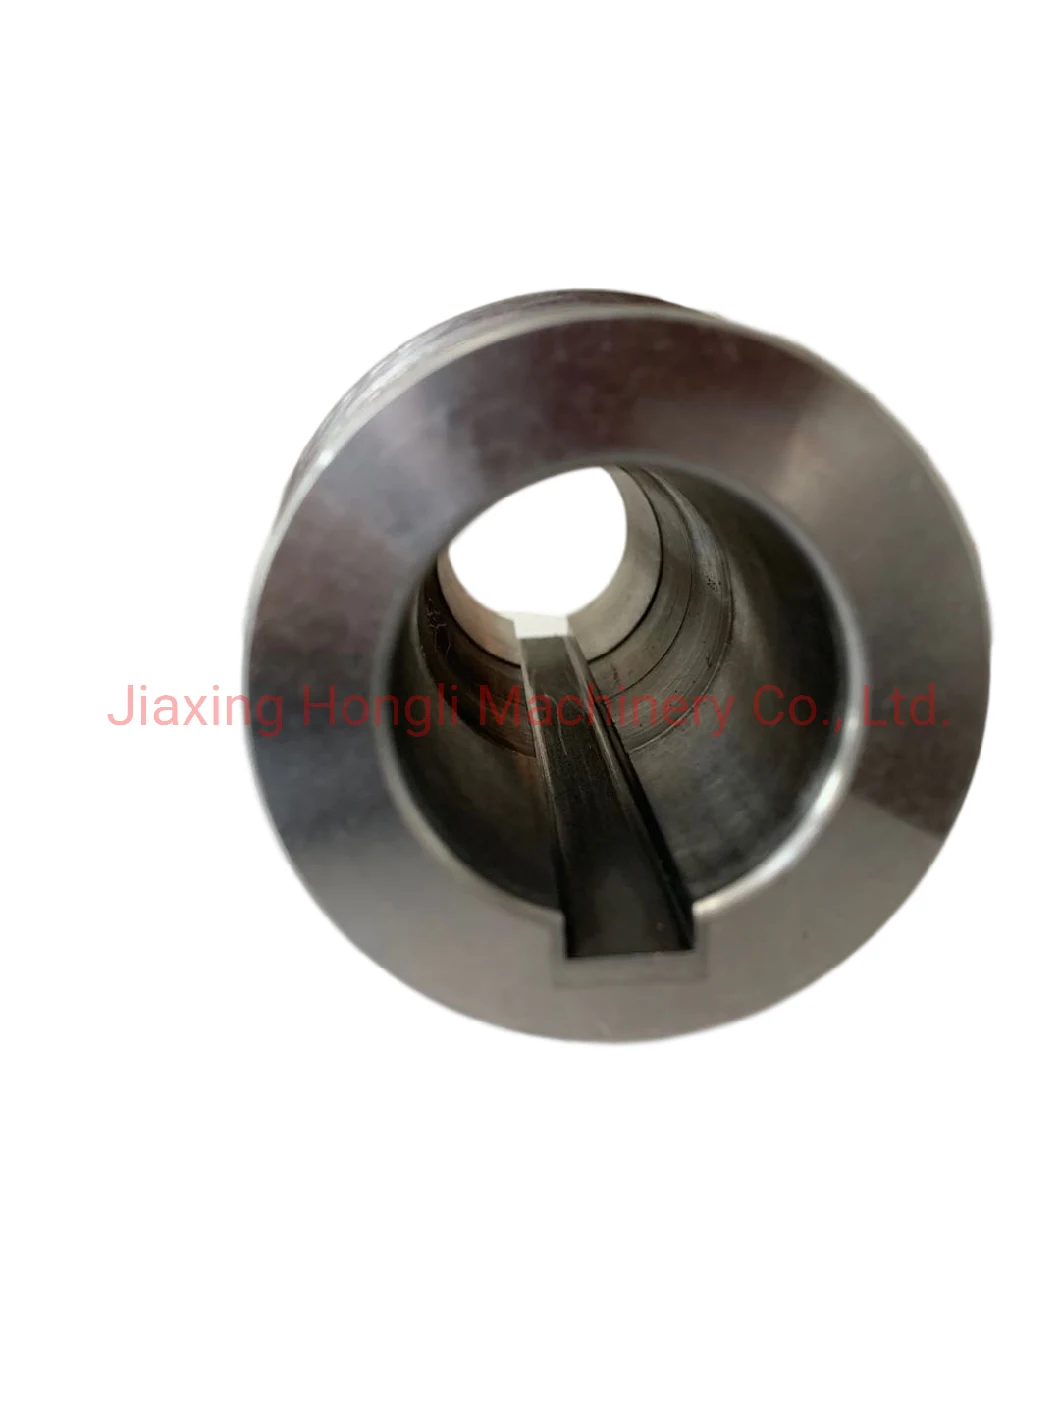 Drive Shaft Jie /China Manufacturer Fabrication Precision CNC Machining Motor Shaft/Stainless Steel 304ss/Shaft Drive